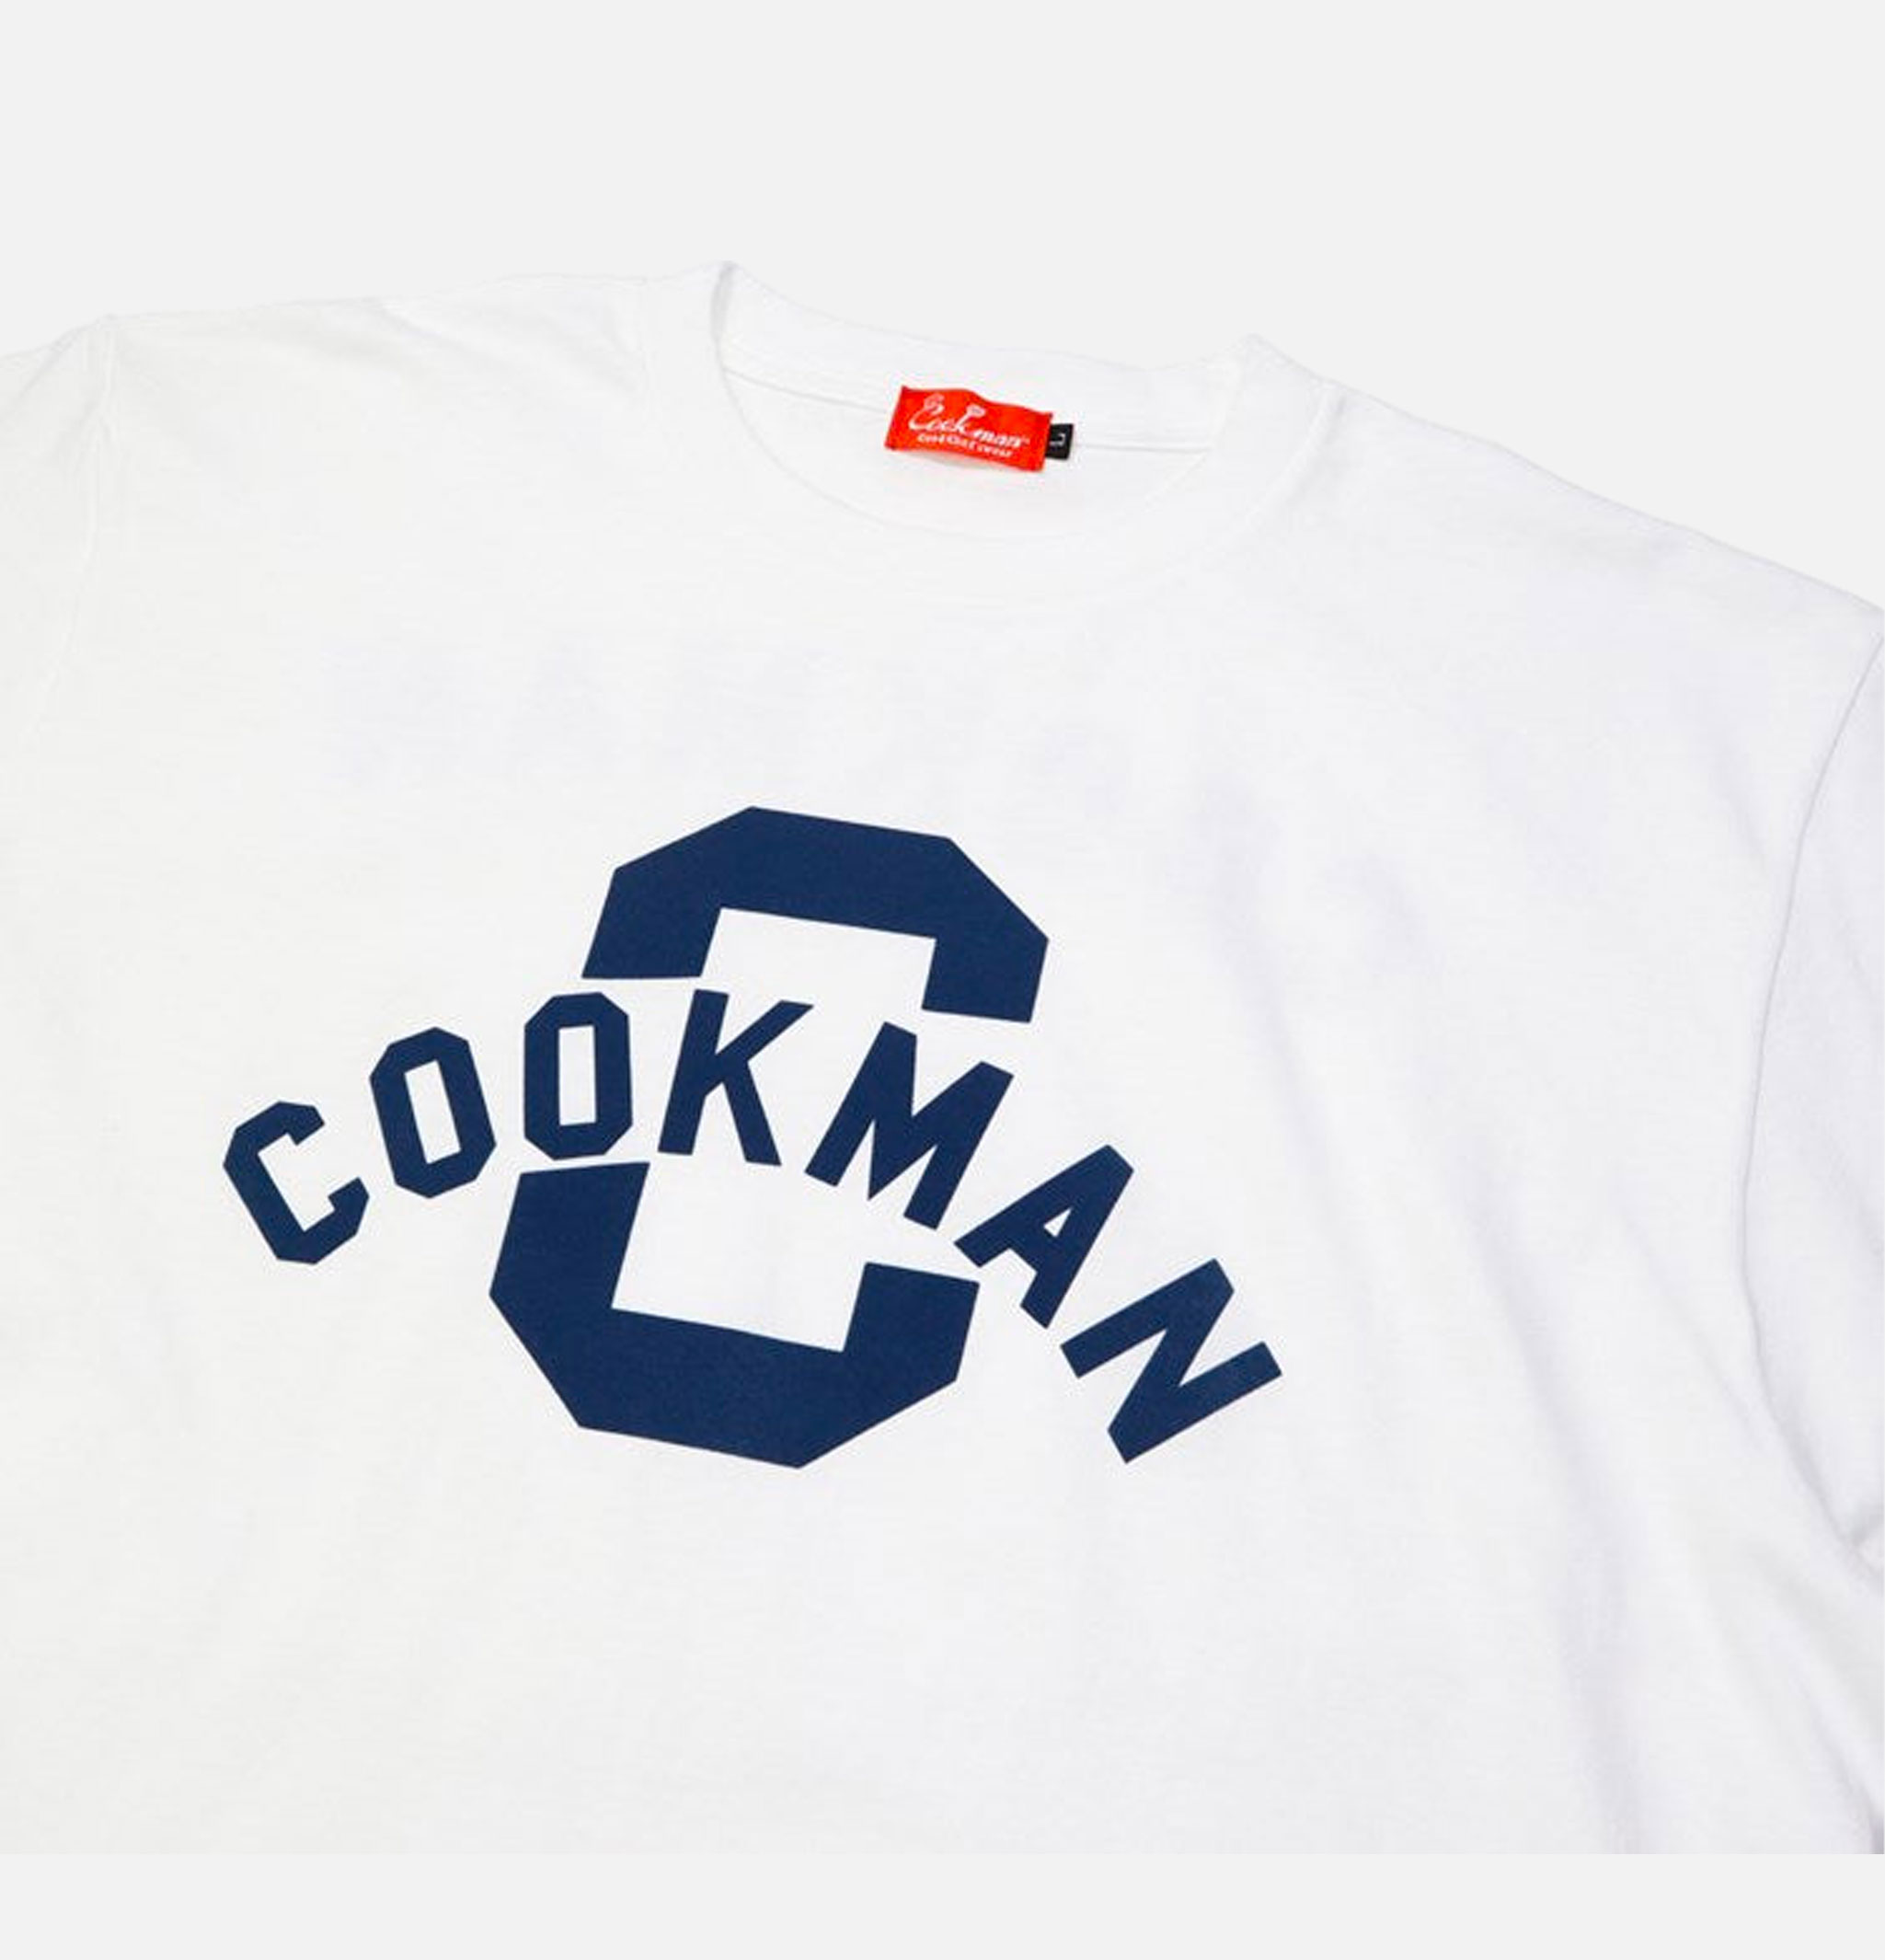 Tee Shirt Flock Arch White Cookman